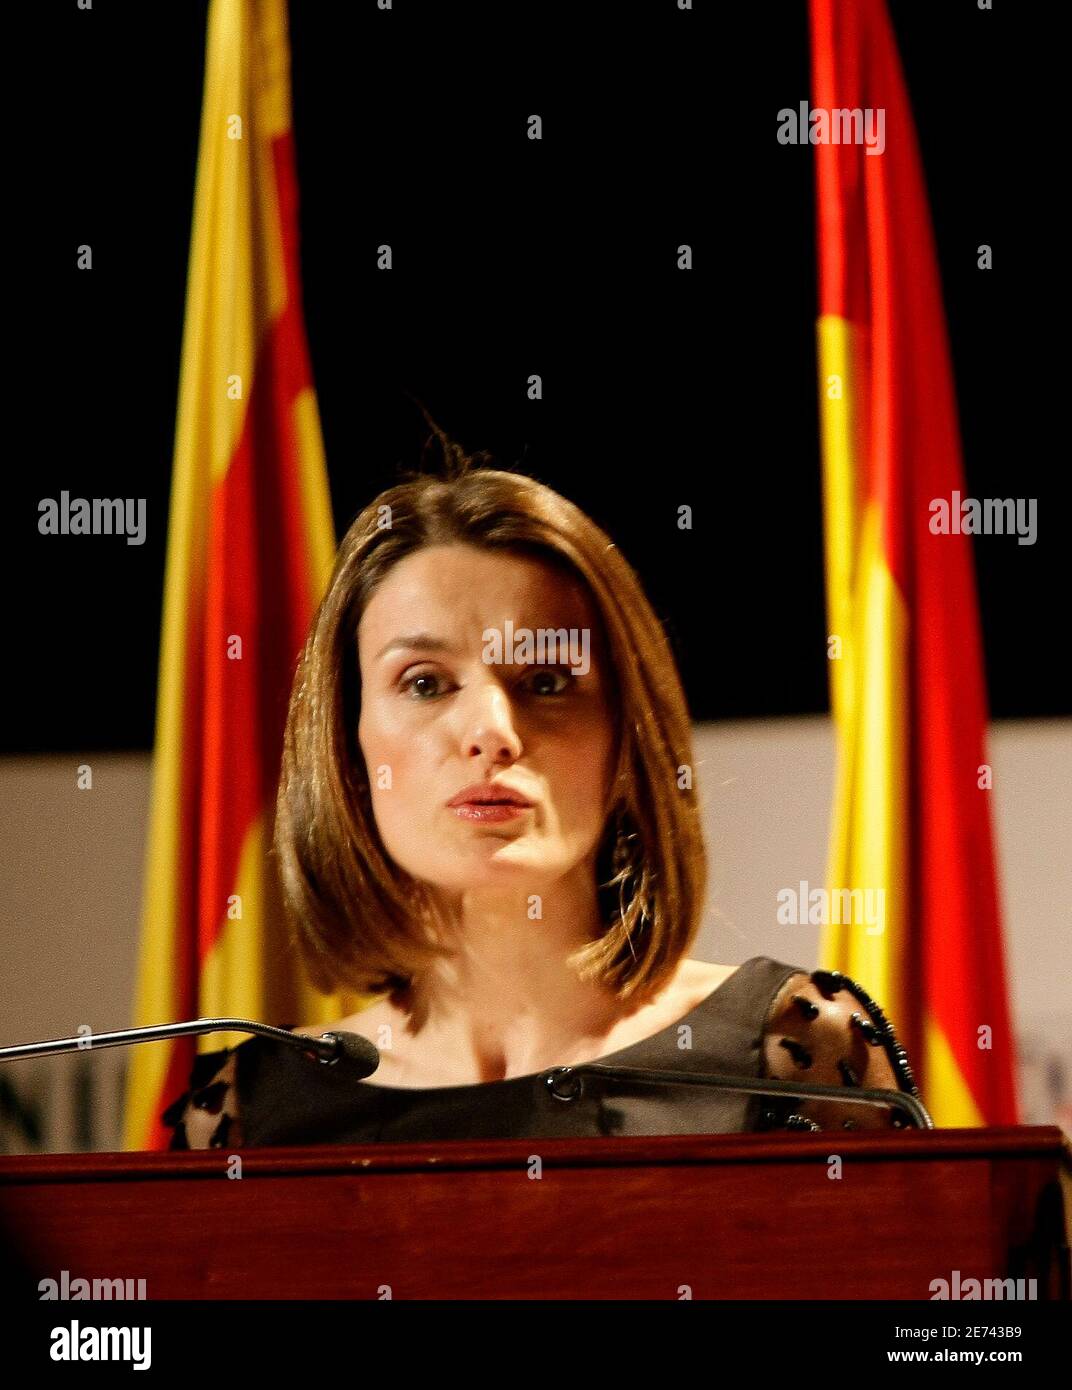 Spain's Princess Letizia speaks during the FIDEM award for the enterprising women at Casa Llotja de Mar in Barcelona March 26, 2008  REUTERS/Gustau Nacarino  (SPAIN) Stock Photo